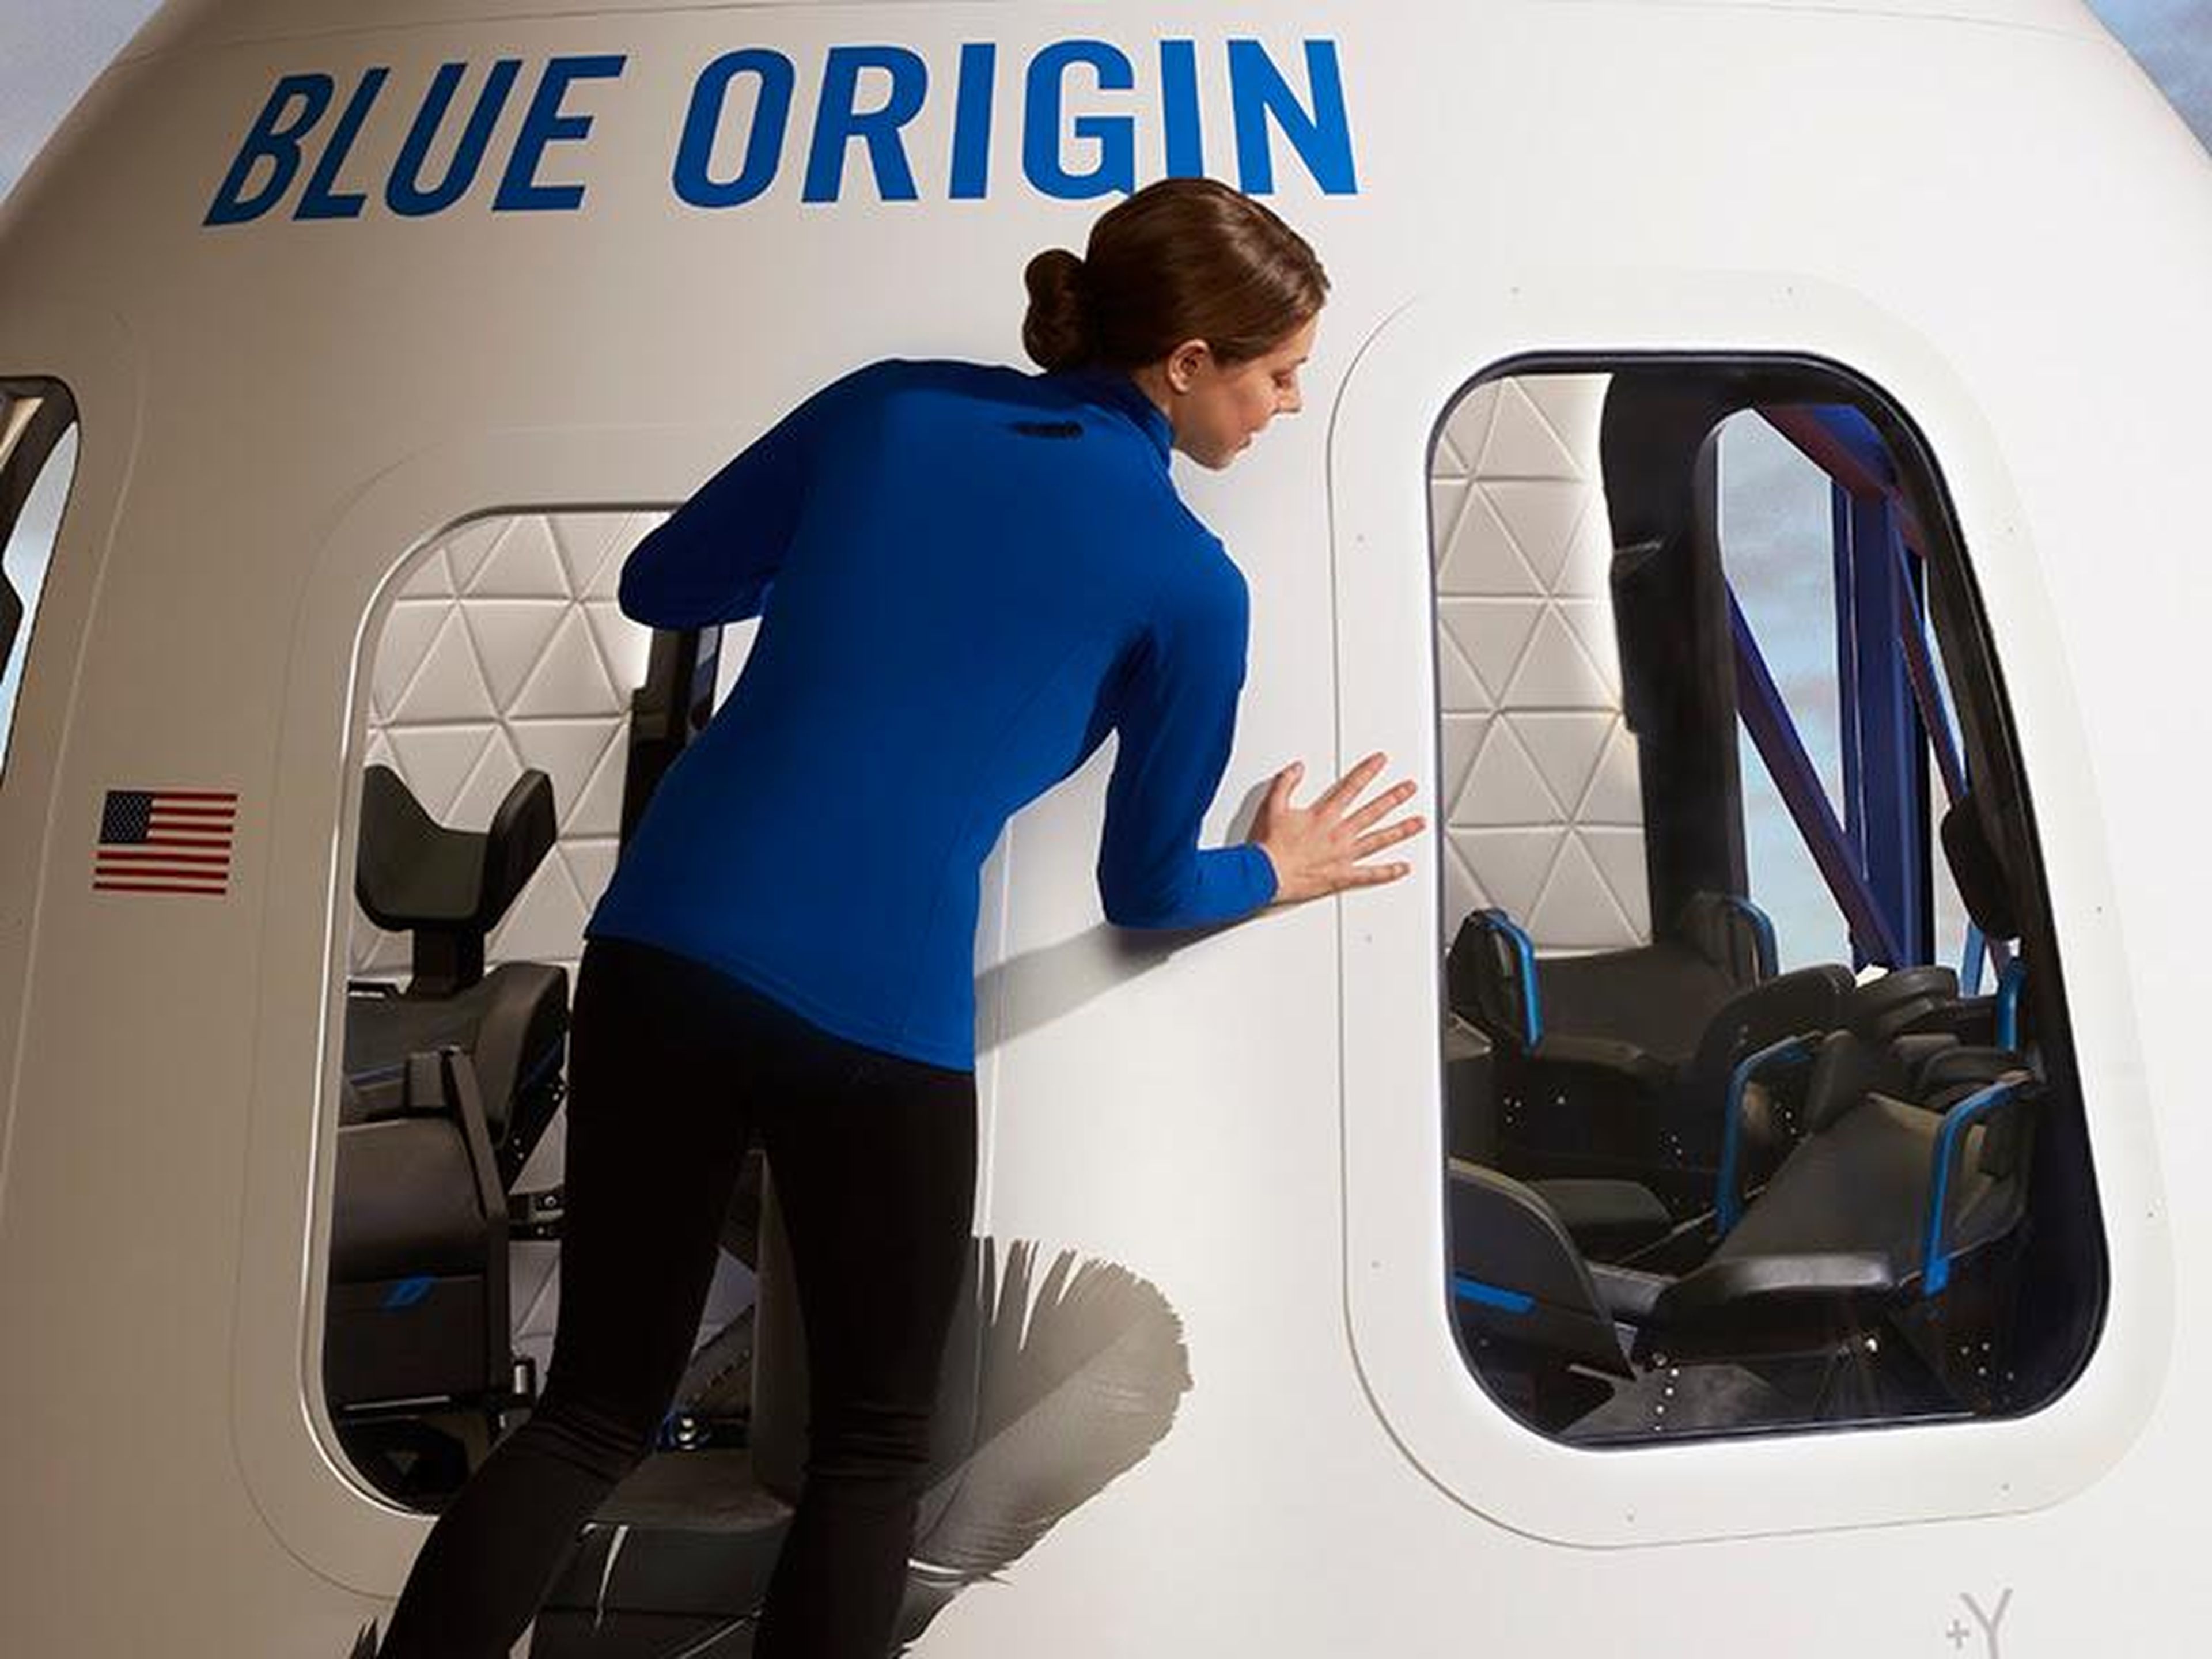 The final design of Blue Origin's New Shepard capsule for suborbital space tourists.